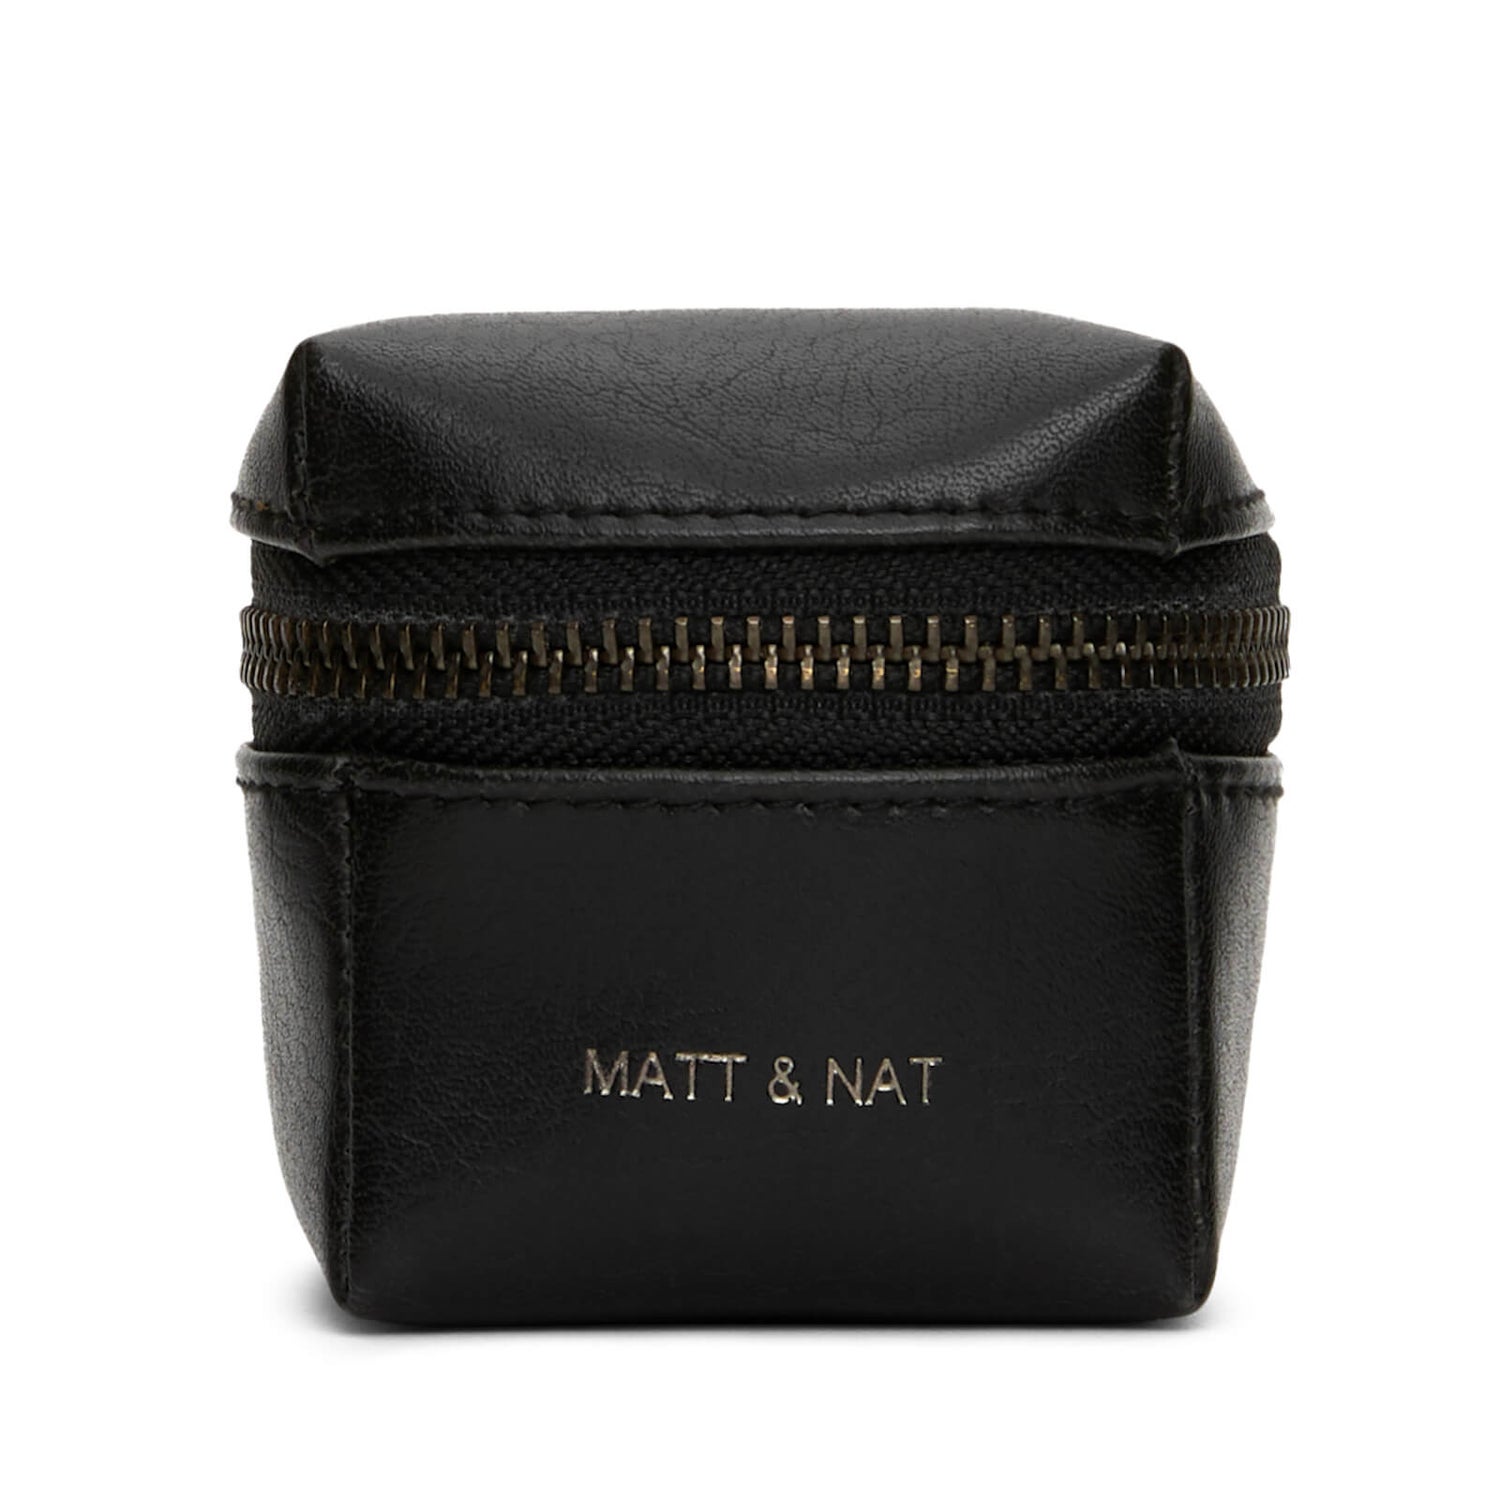 Matt & Nat Small Darling Jewellery Case - Black